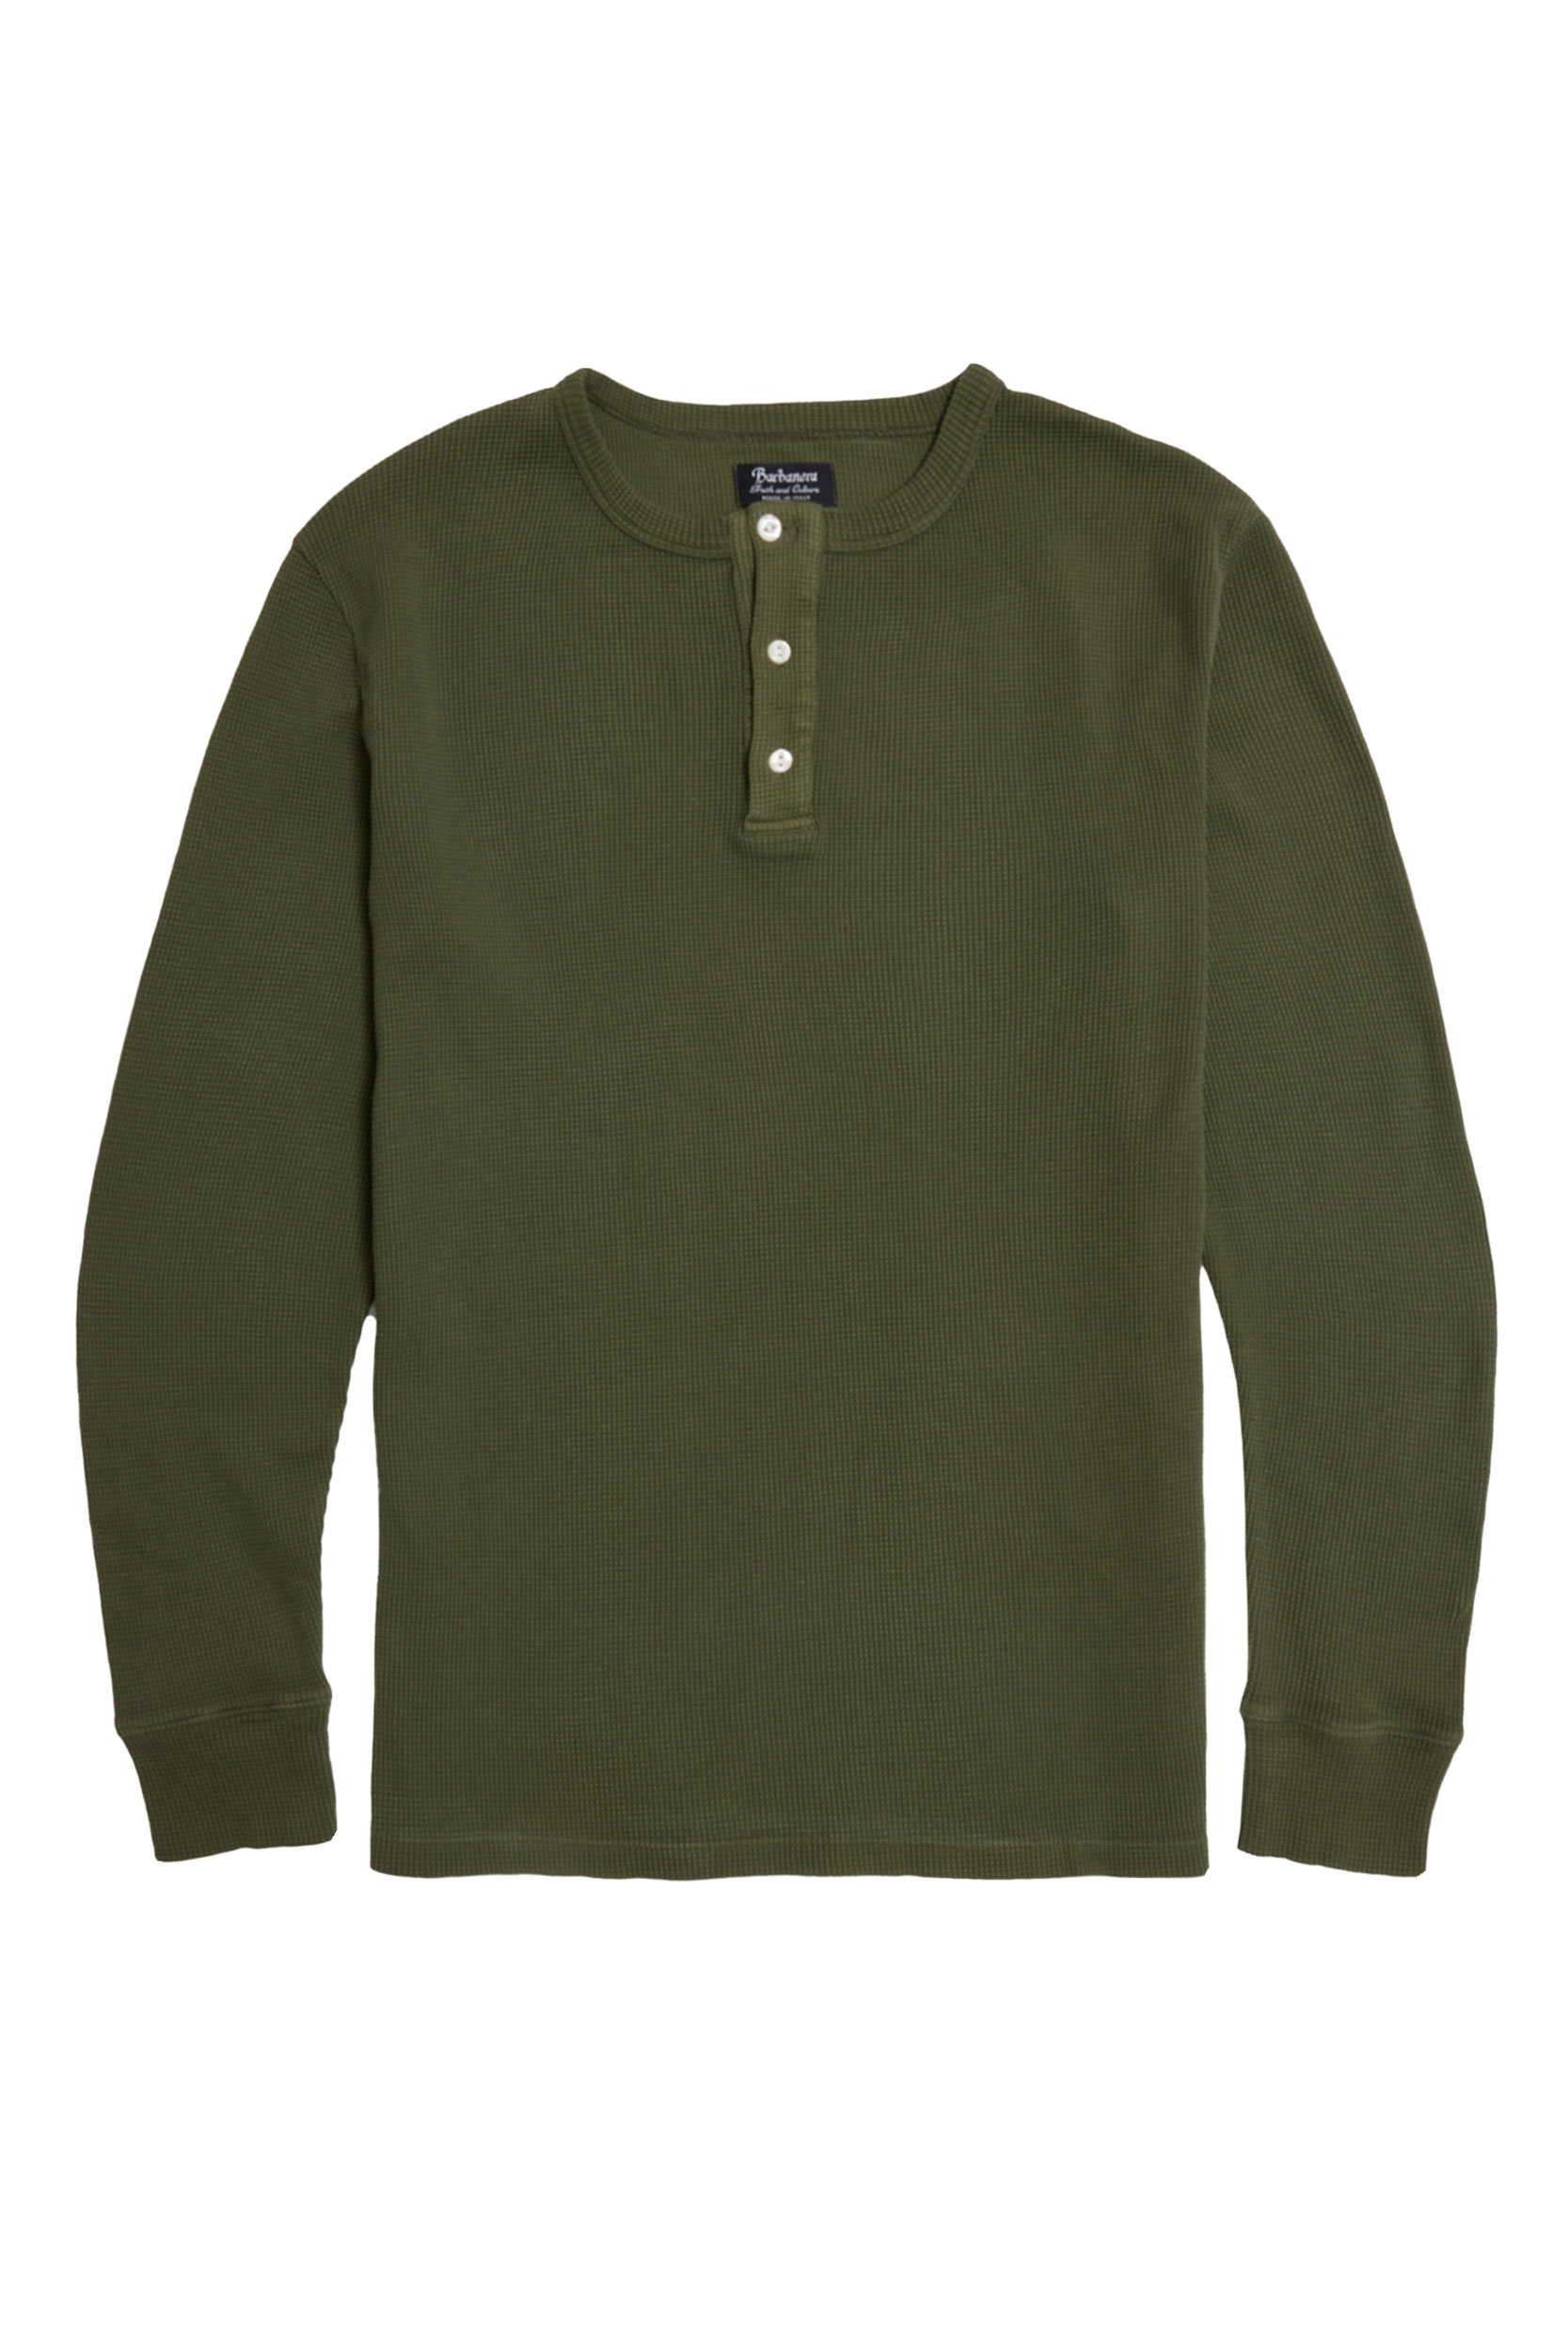 Tuco Green Waffle Knit Cotton Henley Shirt - Barbanera